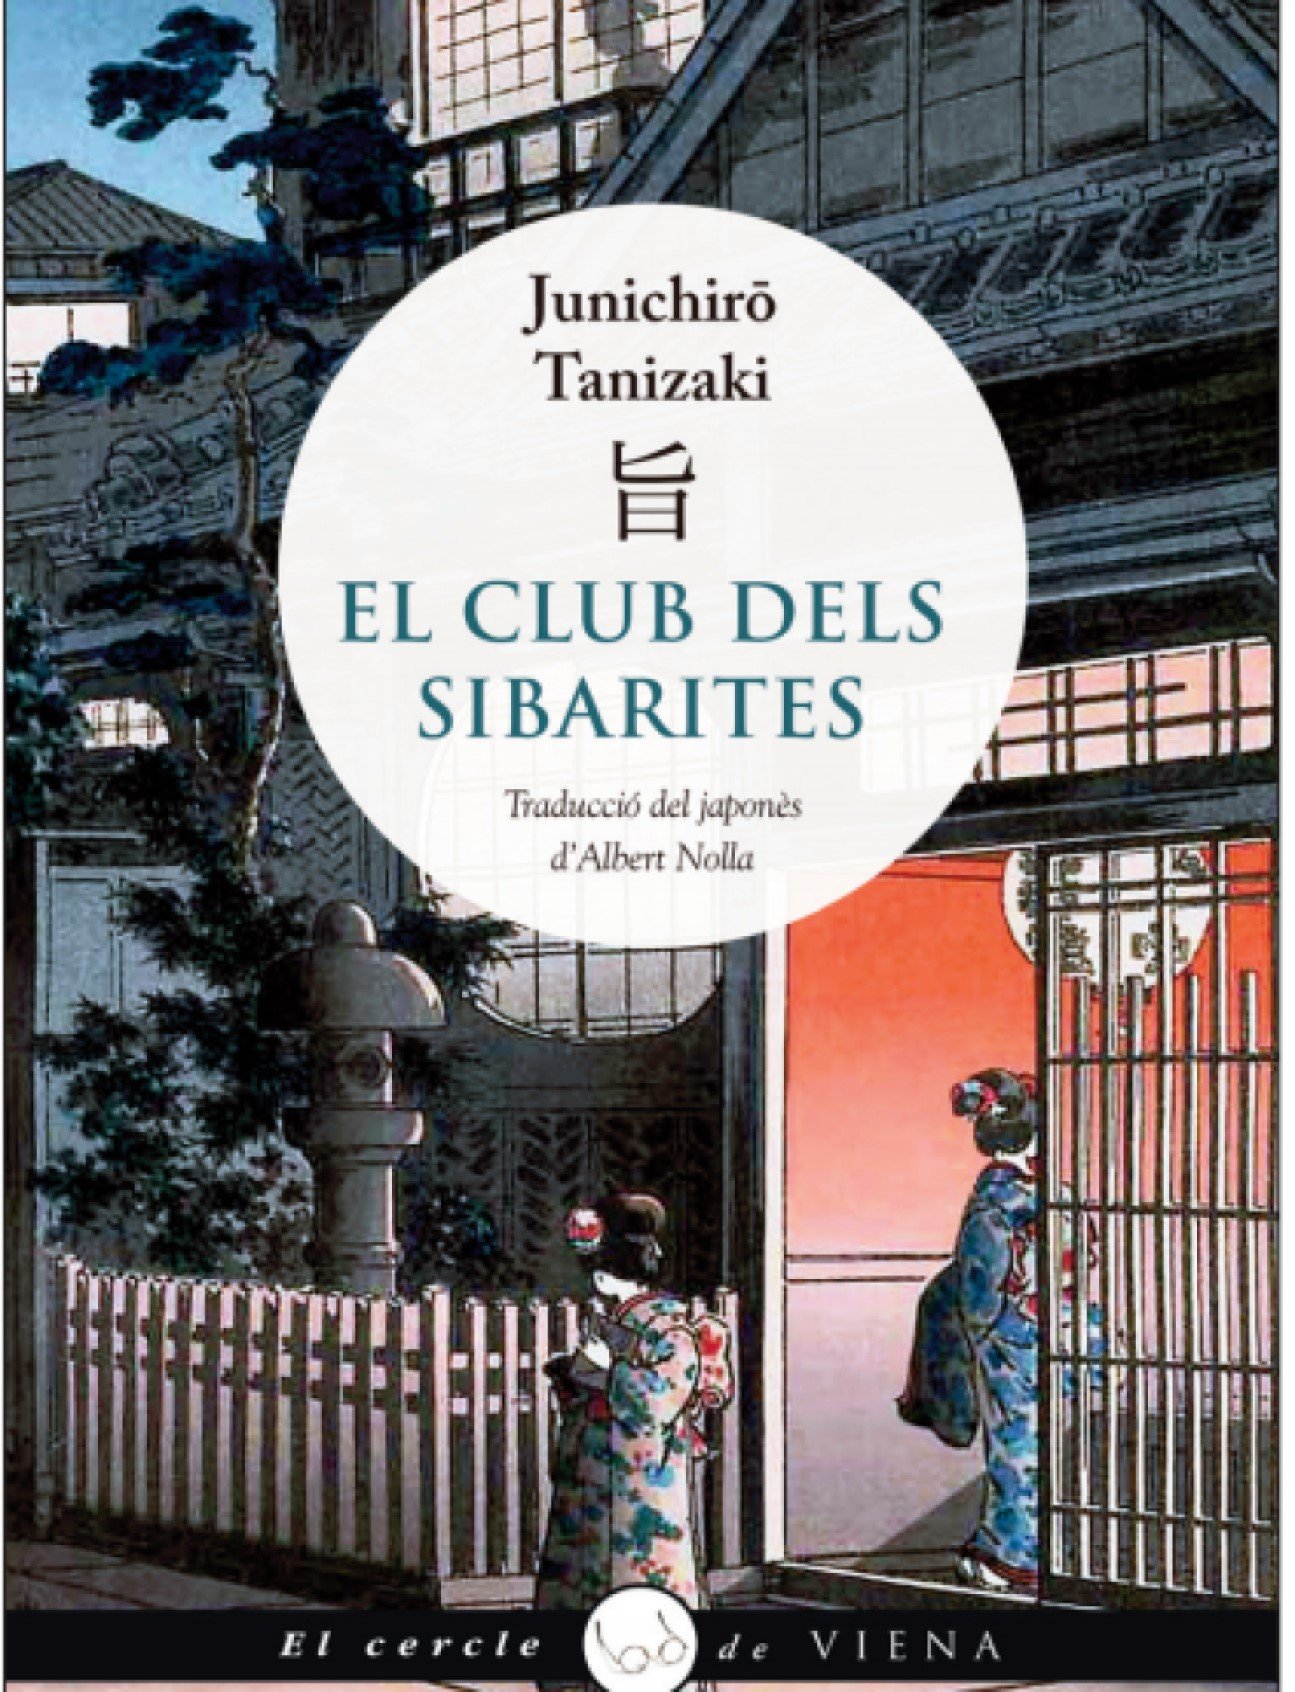 Januchirô Tanizaki, 'El club dels sibarites'. Viena, 115 p., 15 €.